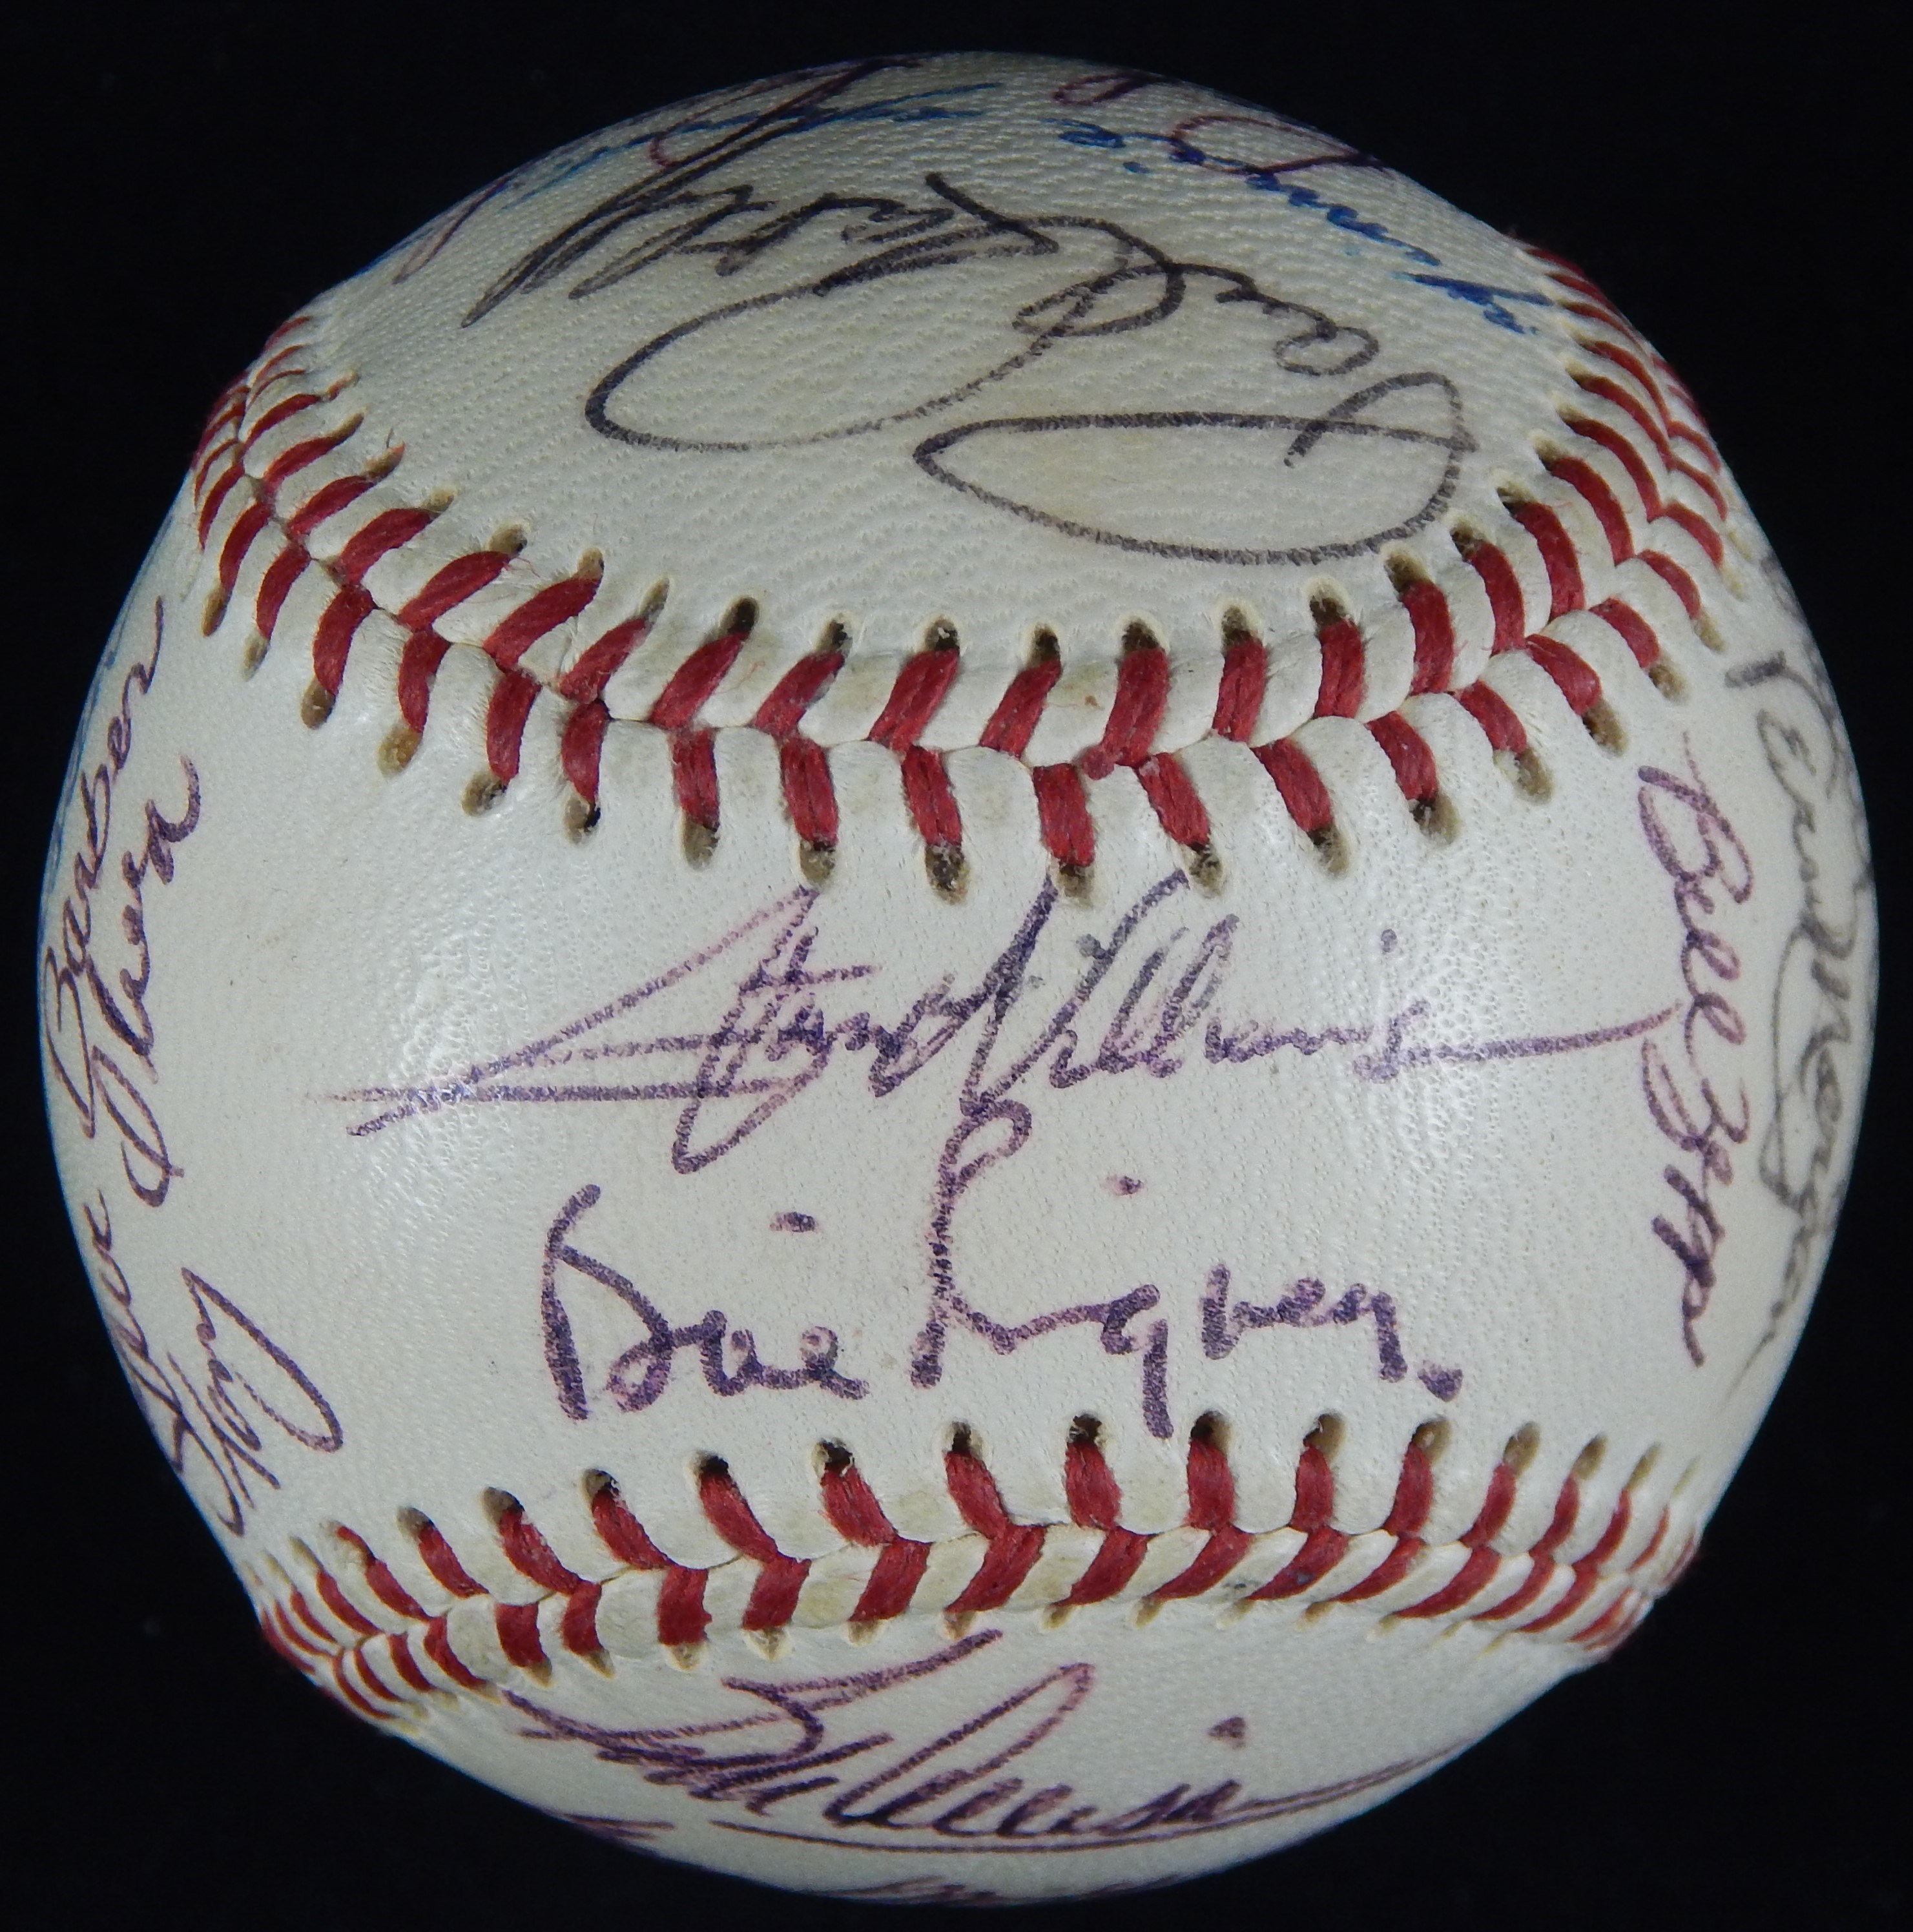 - 1970 Minnesota Twins Team Signed Baseball with 31 Signatures - PSA/DNA